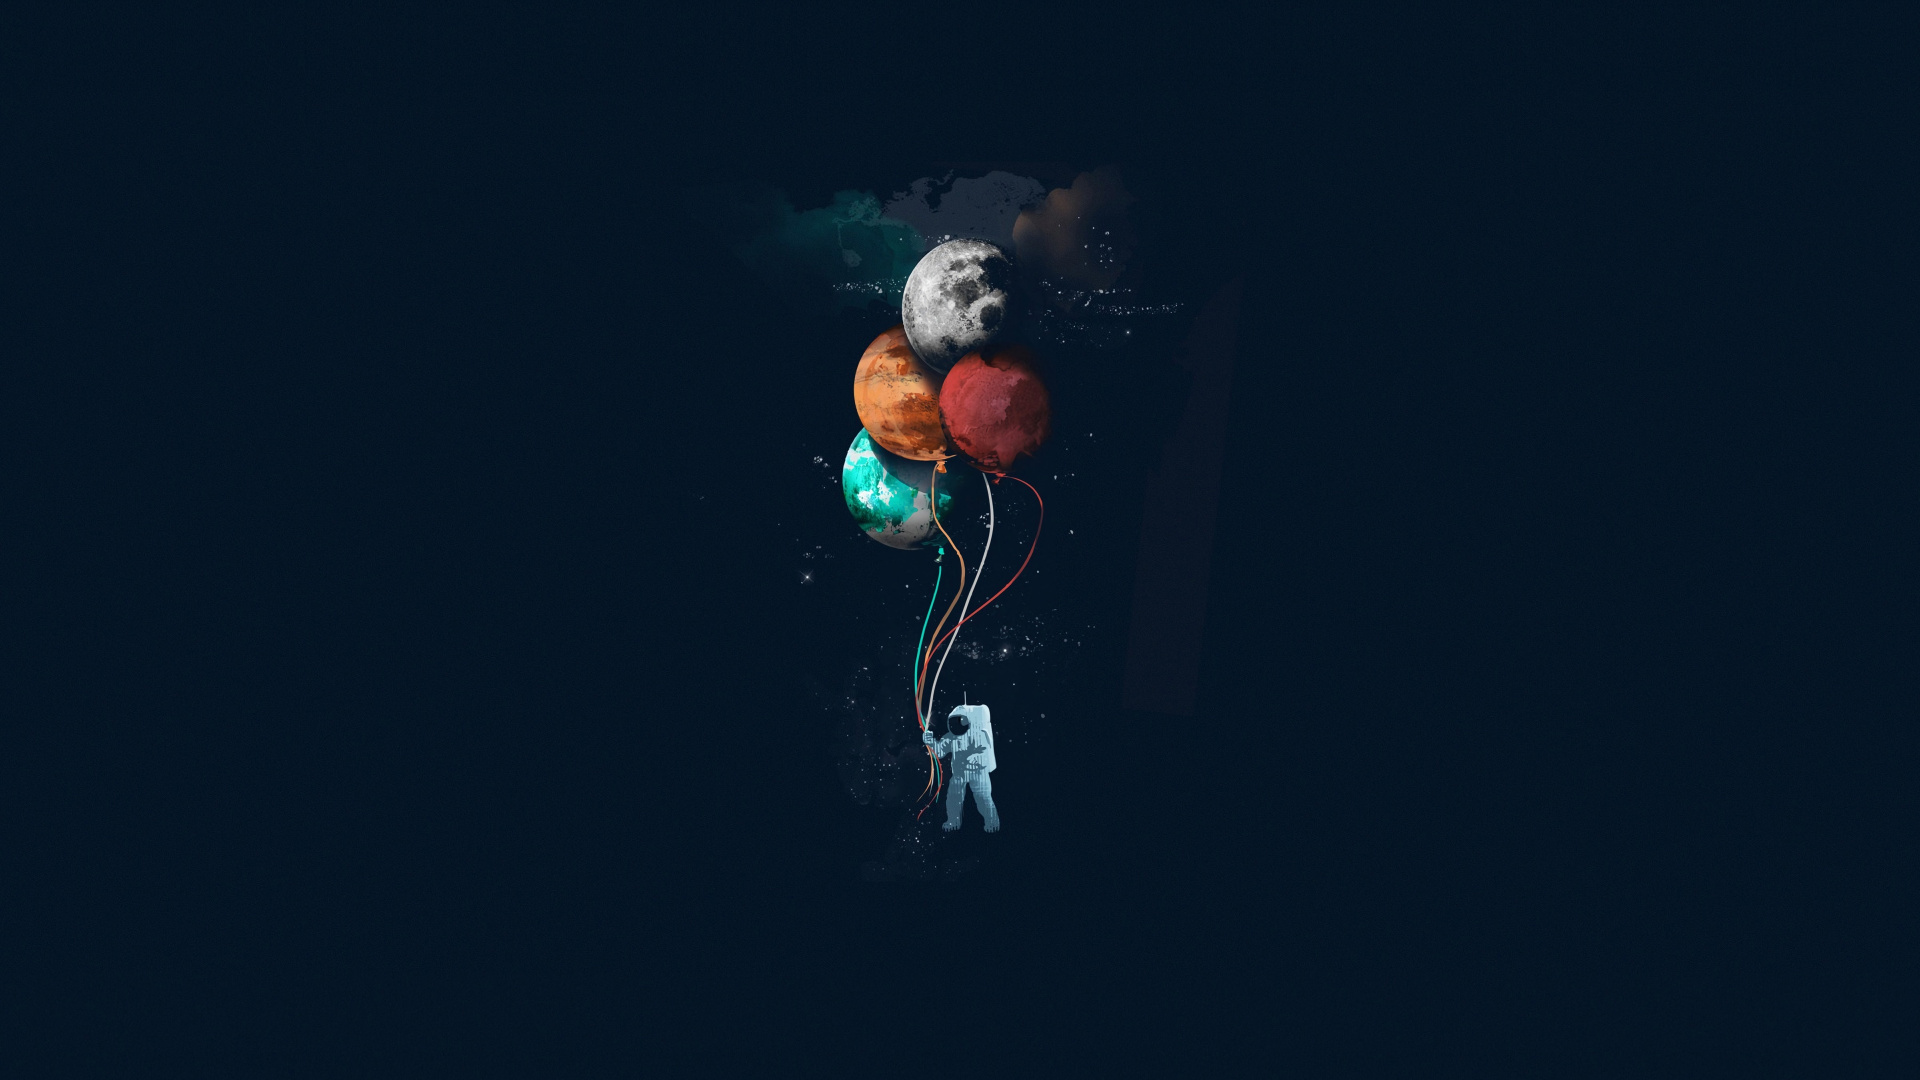 Astronaut Space Minimal Balloons Art Wallpaper